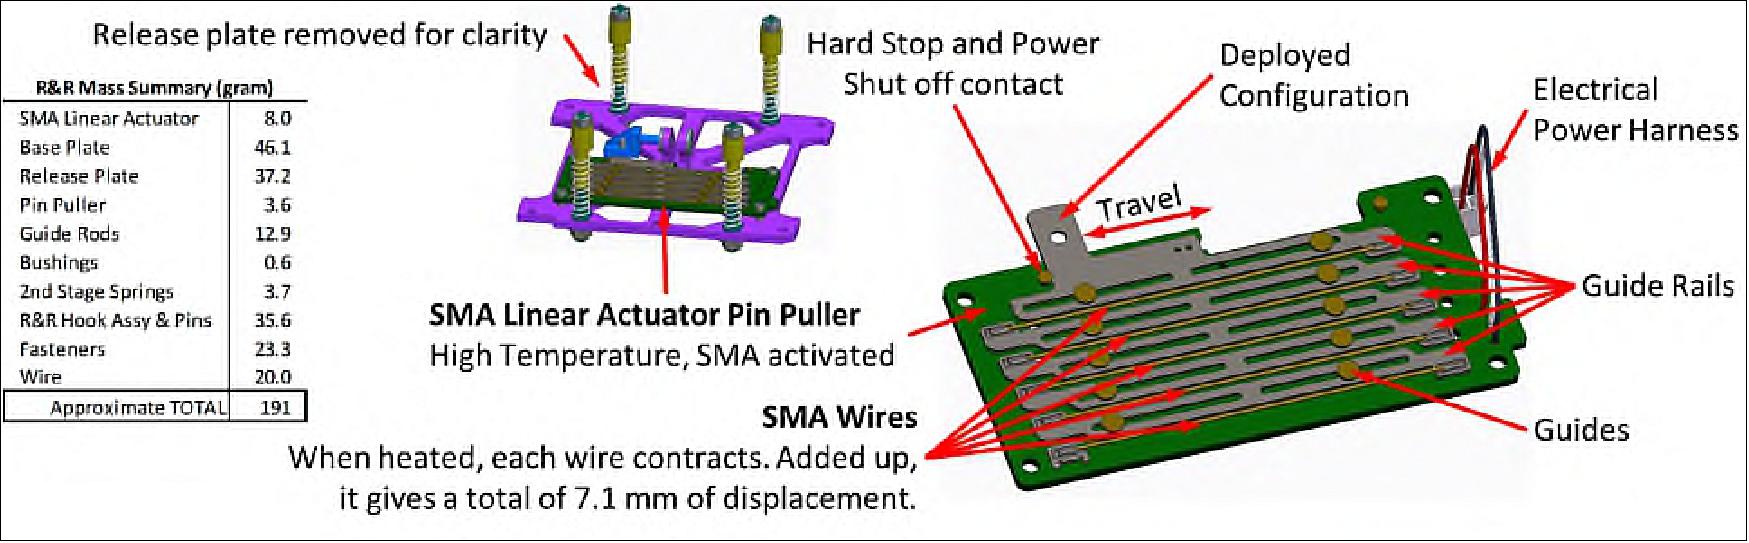 Figure 3: R&R mass estimate and SMA linear actuator details (image credit: NASA/GRC)